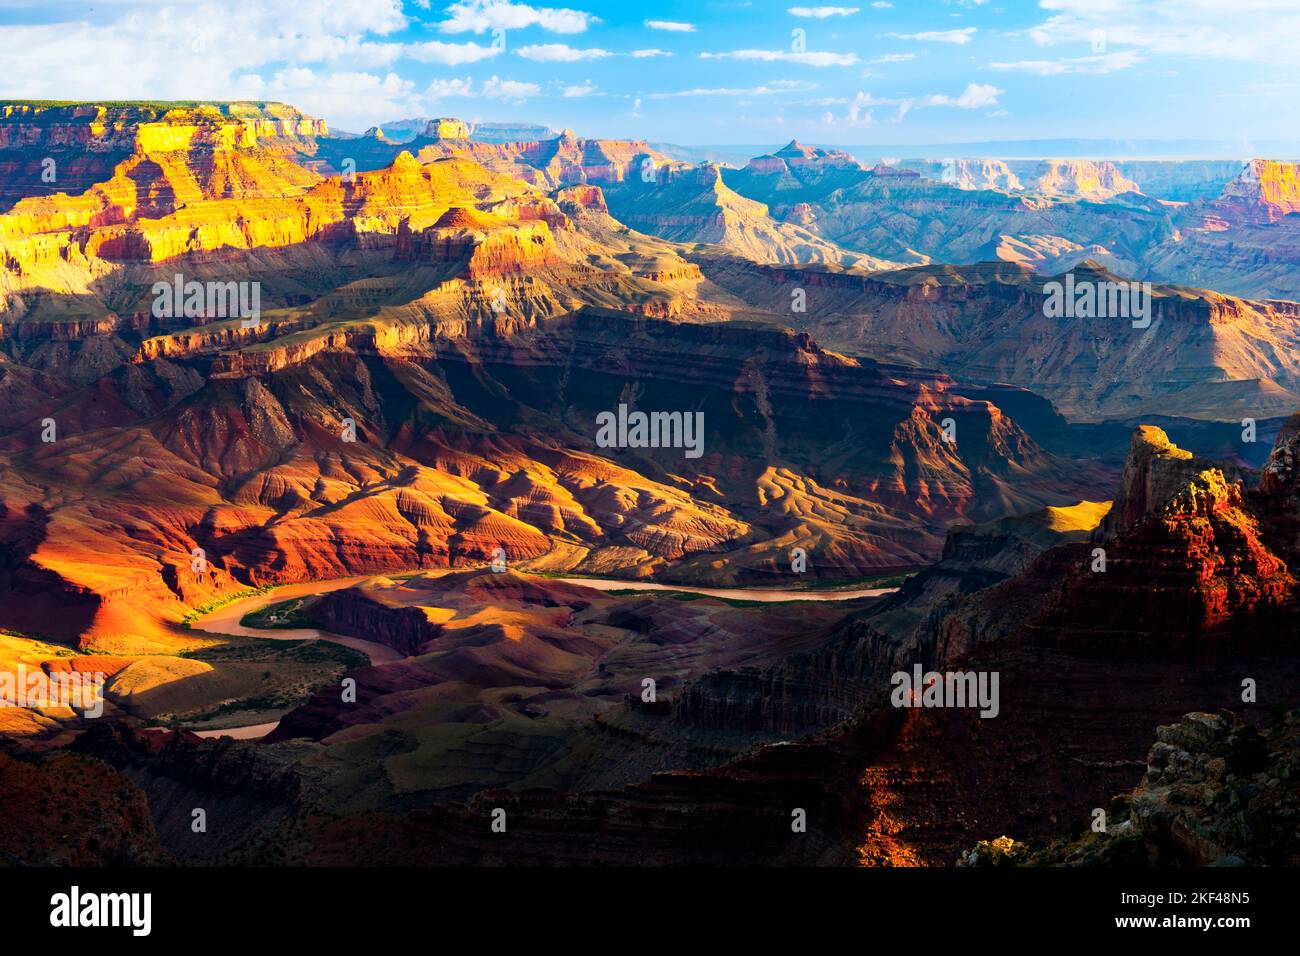 Morgen am Lipan Point, Colorado River, Grand Canyon South Rim, Süd Rand, Arizona, USA, Nordamerika Stock Photo